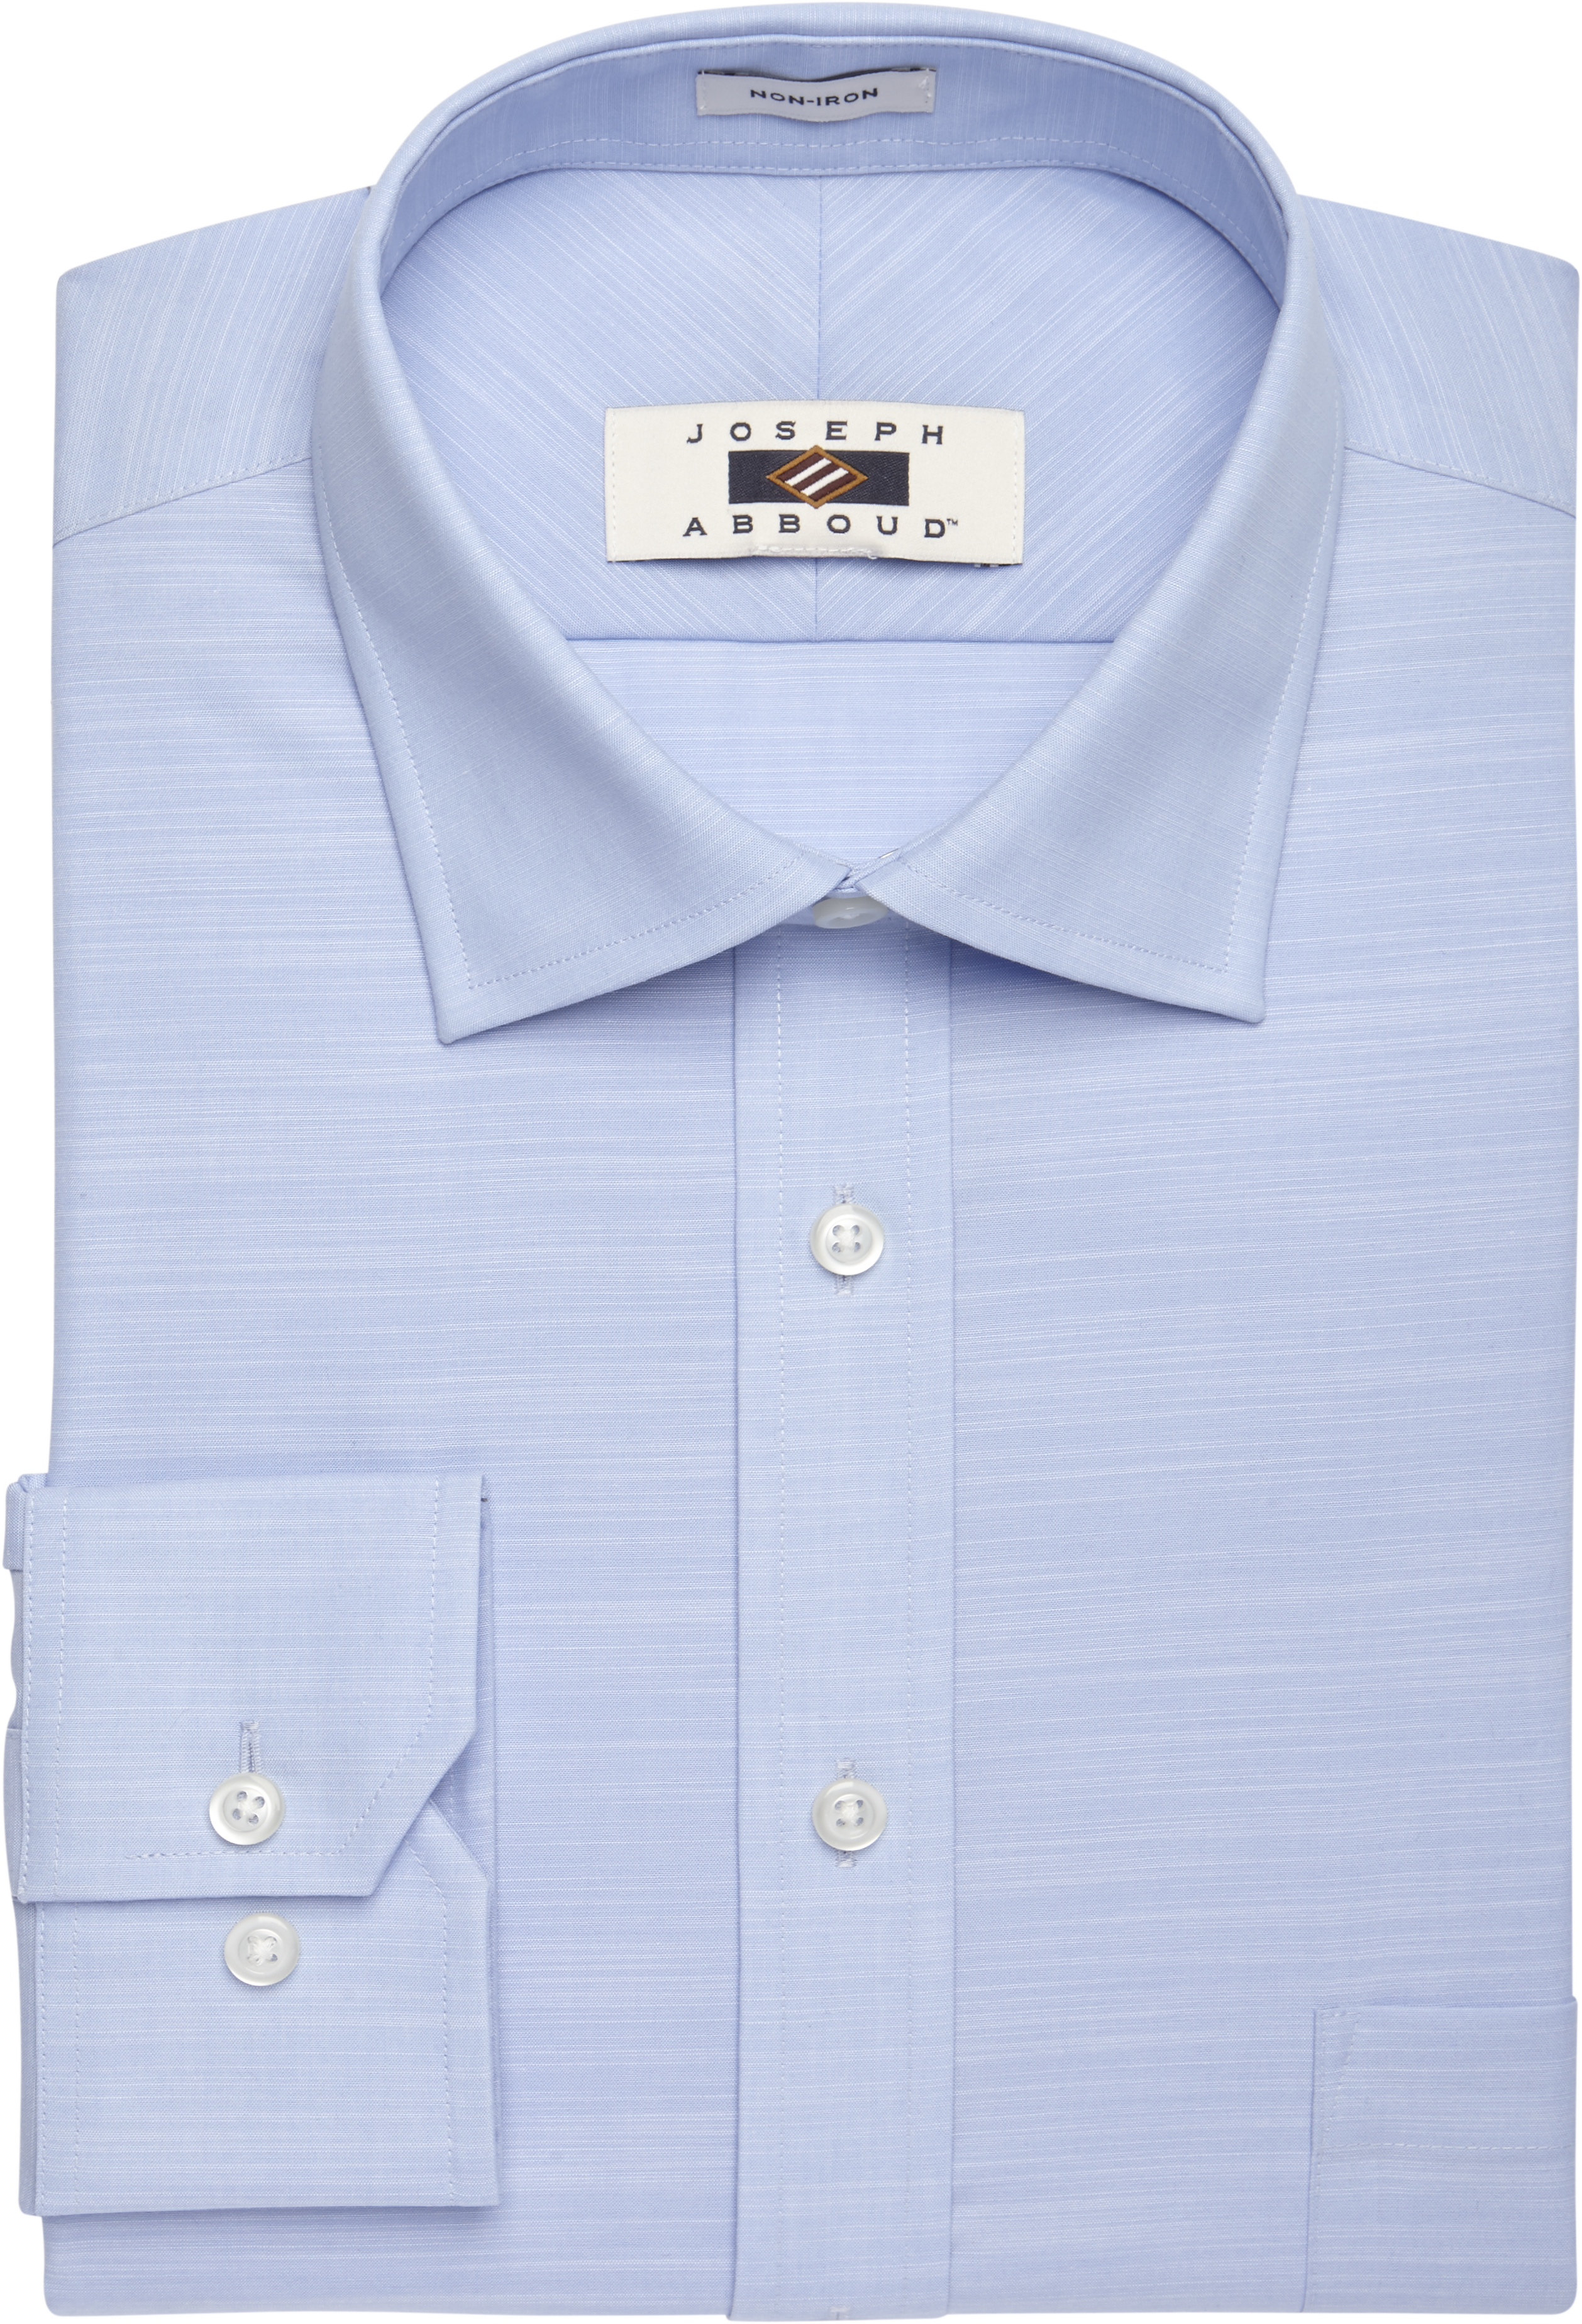 Joseph Abboud Sky Blue Dress Shirt - Men's Sale | Men's Wearhouse